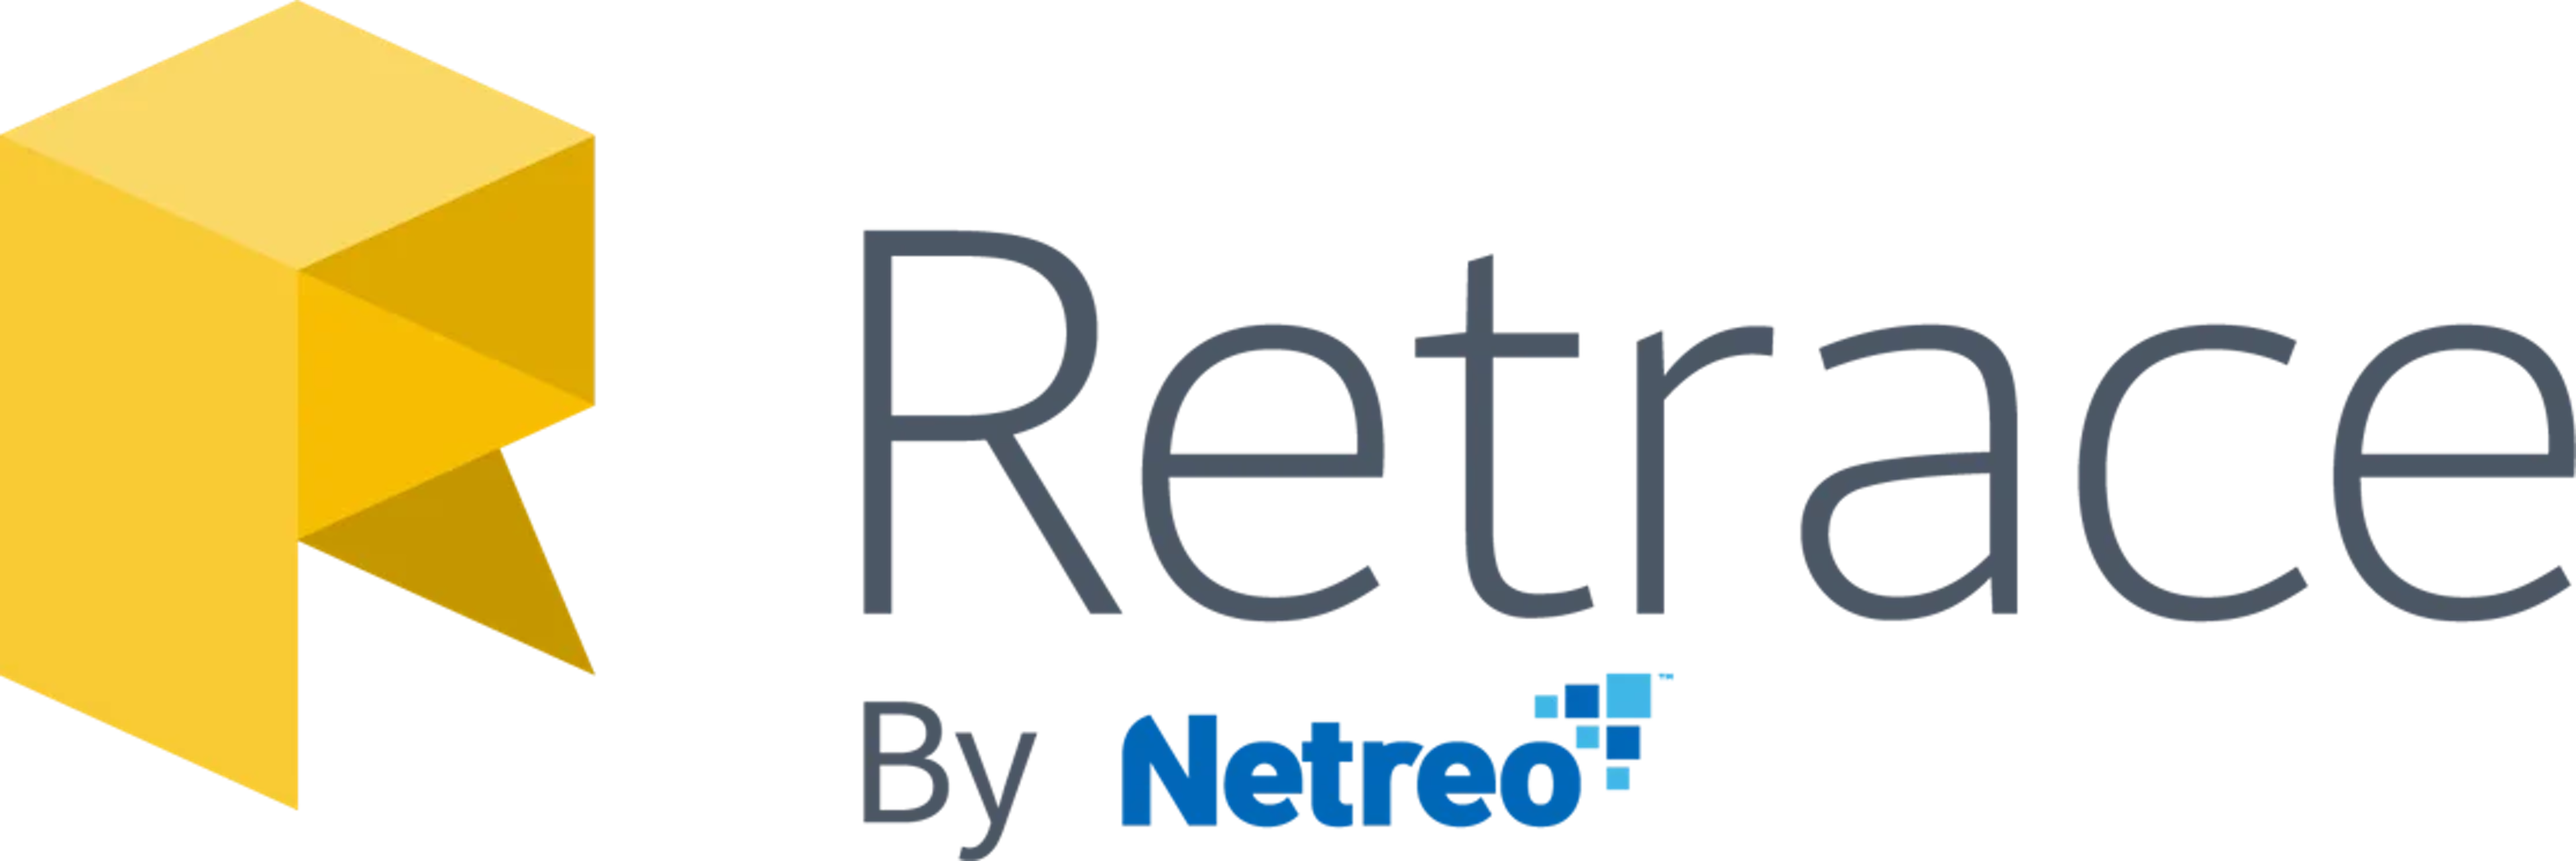 Retrace by Netreo Logo